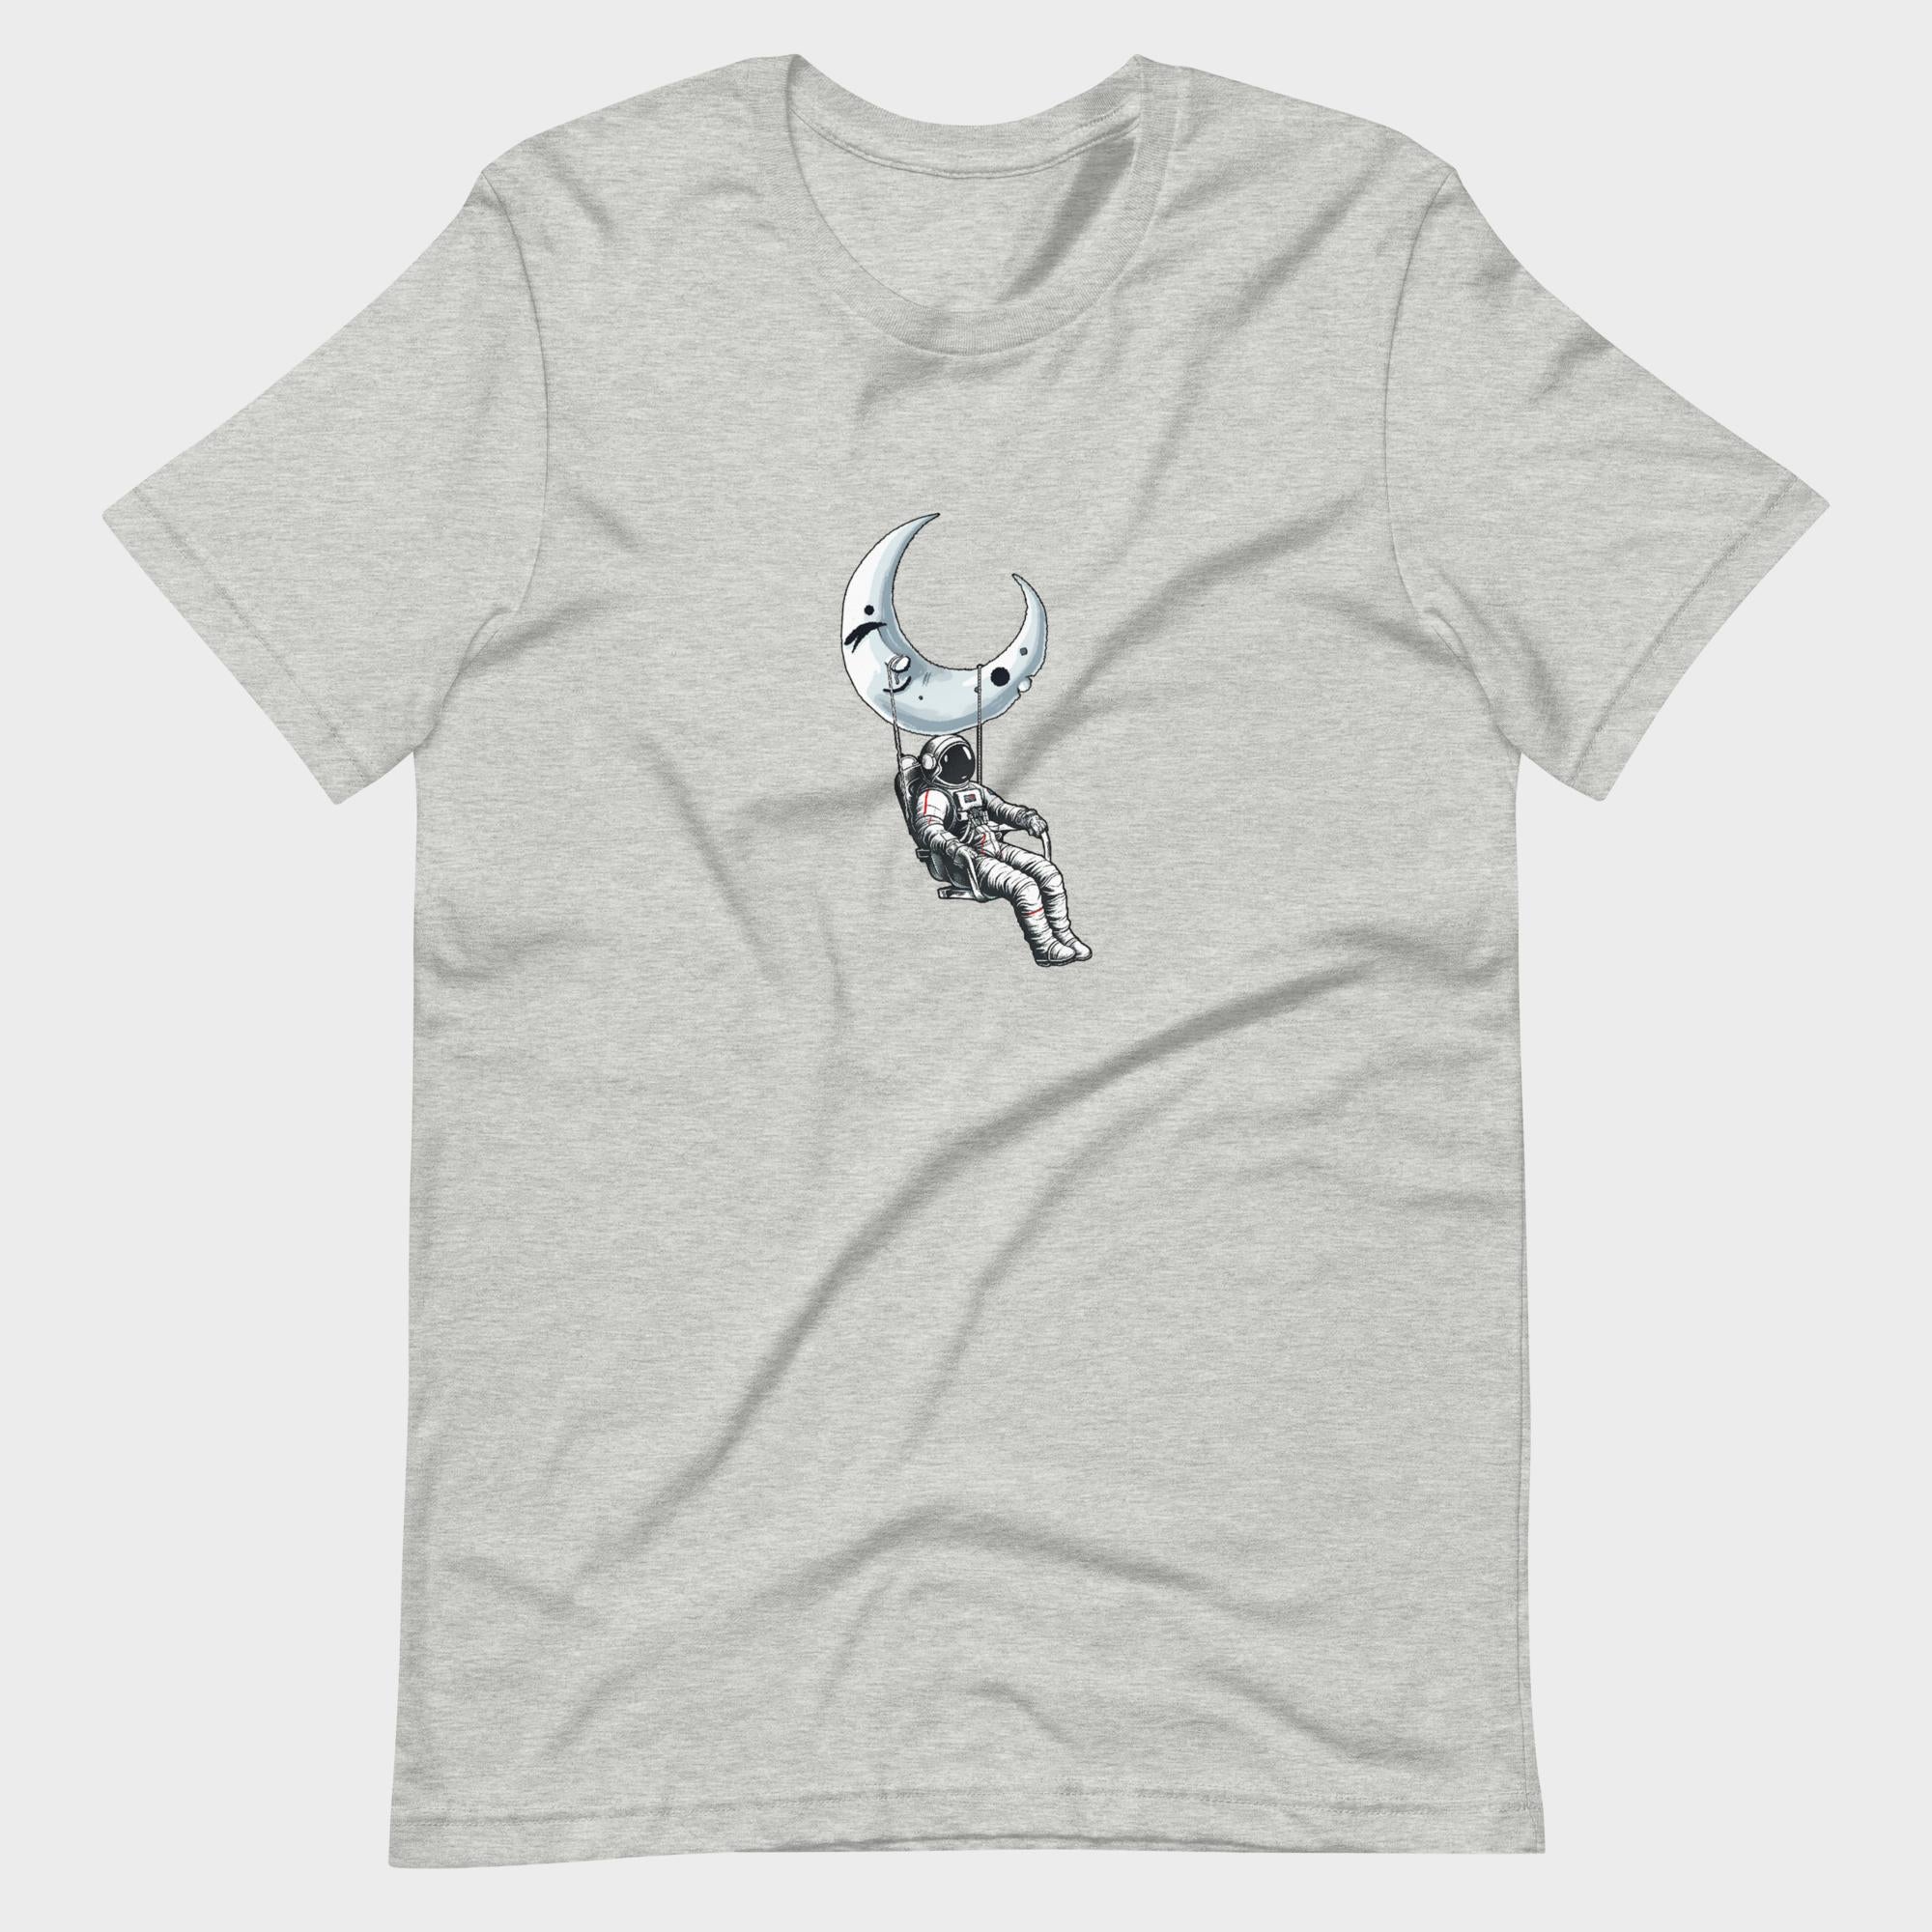 A Space Break - T-Shirt